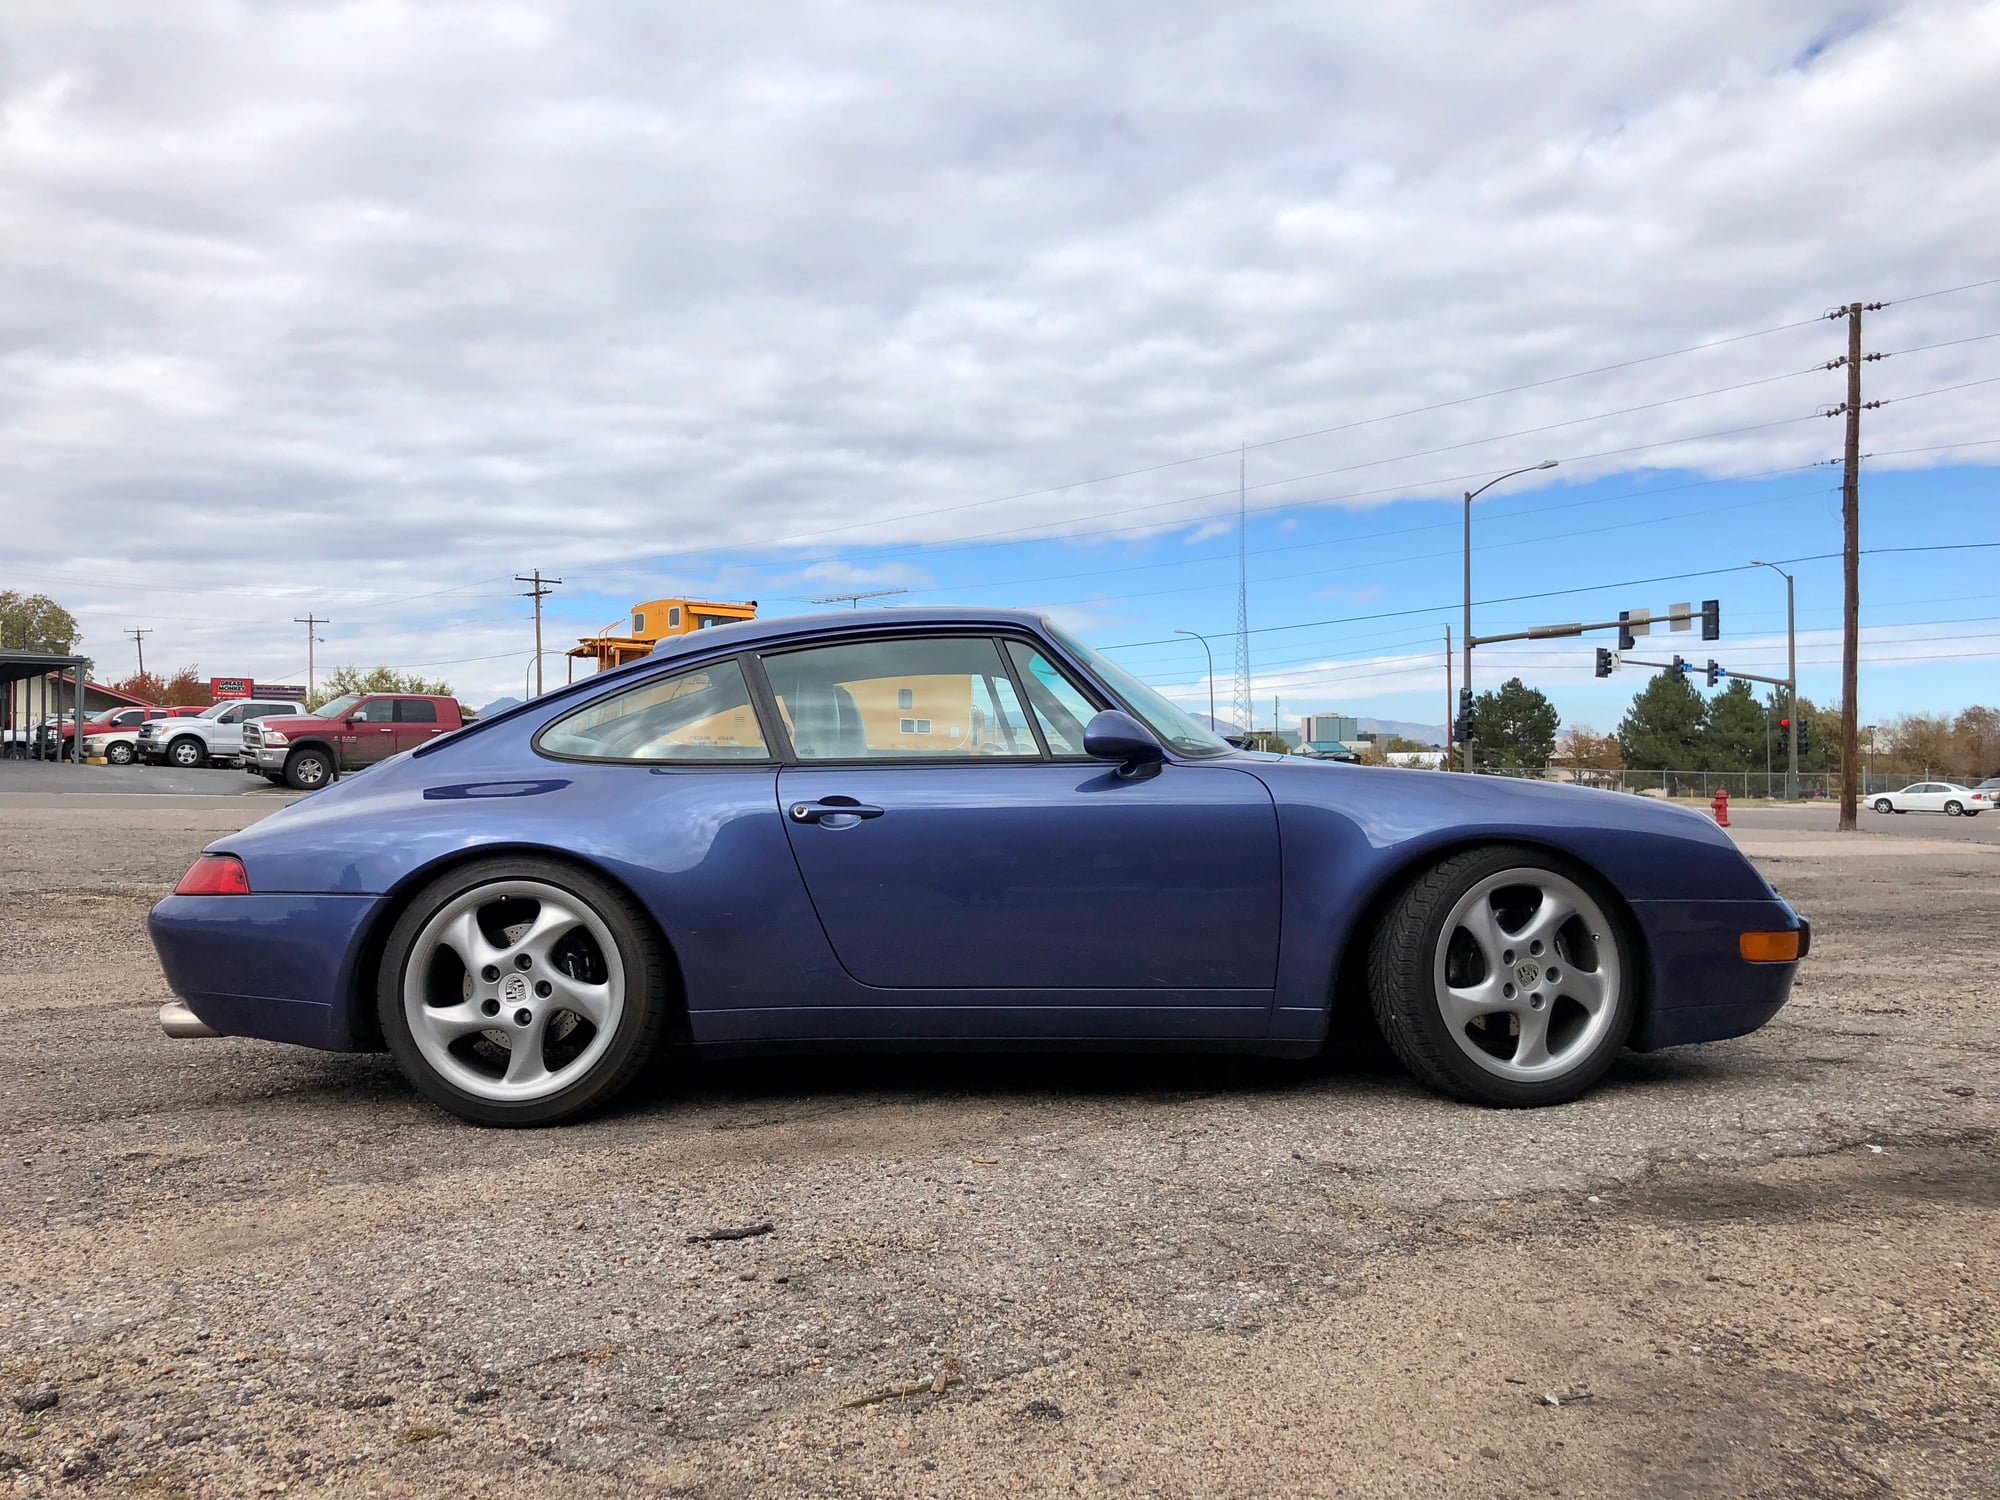 1997 Porsche 911 - Zenith Blue Porsche 993 - 911 Carrera - Used - VIN WP0AA2991VS321569 - 128,000 Miles - 6 cyl - 2WD - Manual - Coupe - Blue - Denver, CO 80228, United States